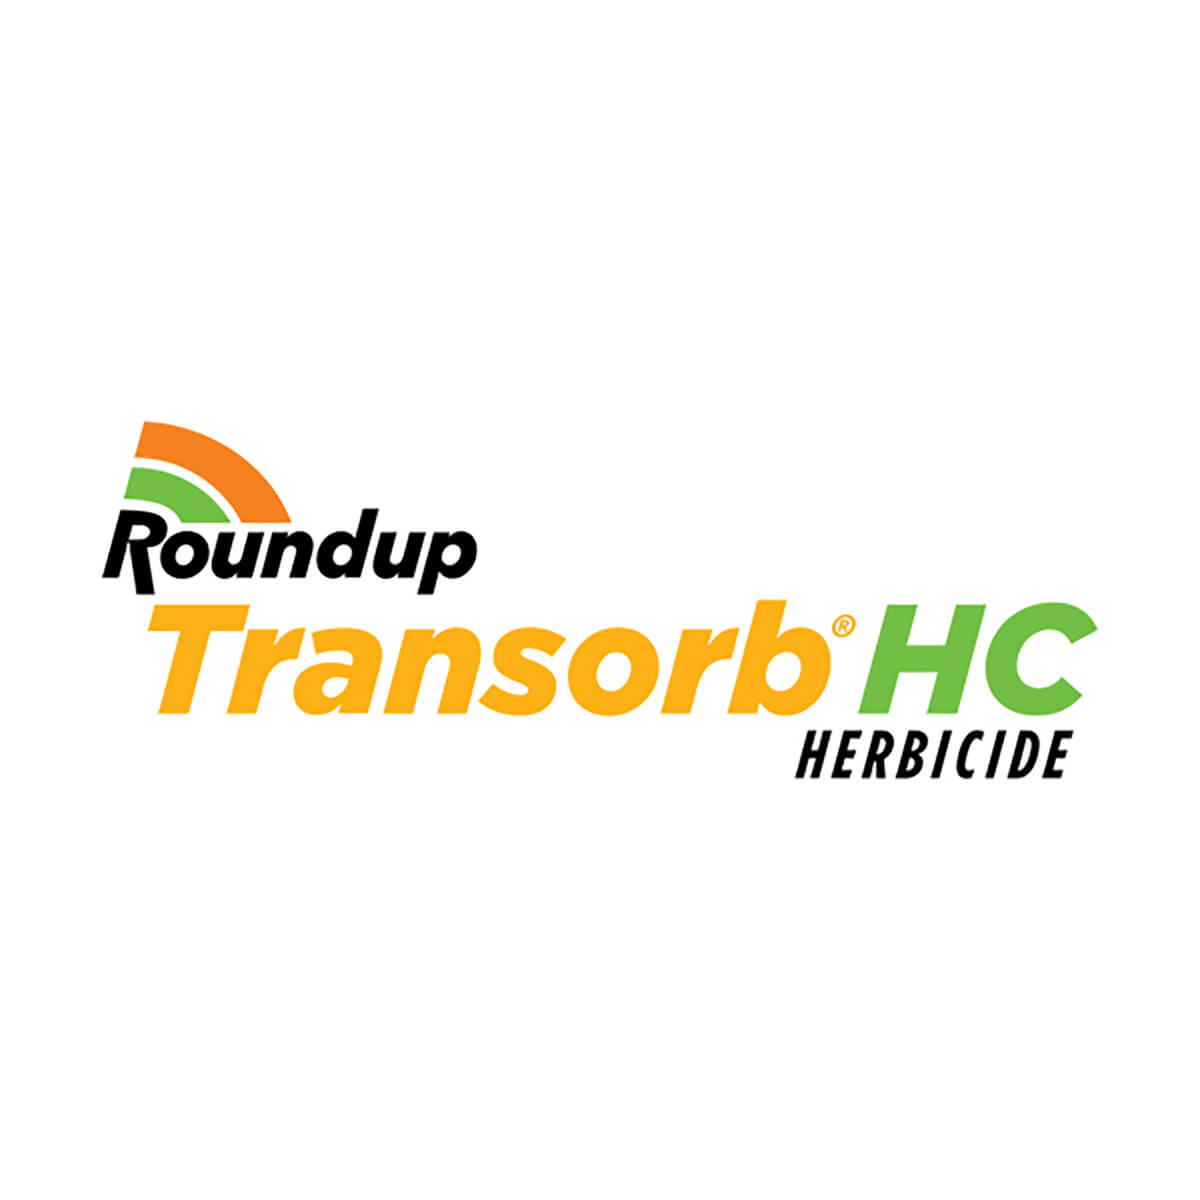 Roundup Transorb HC Herbicide - 10 L